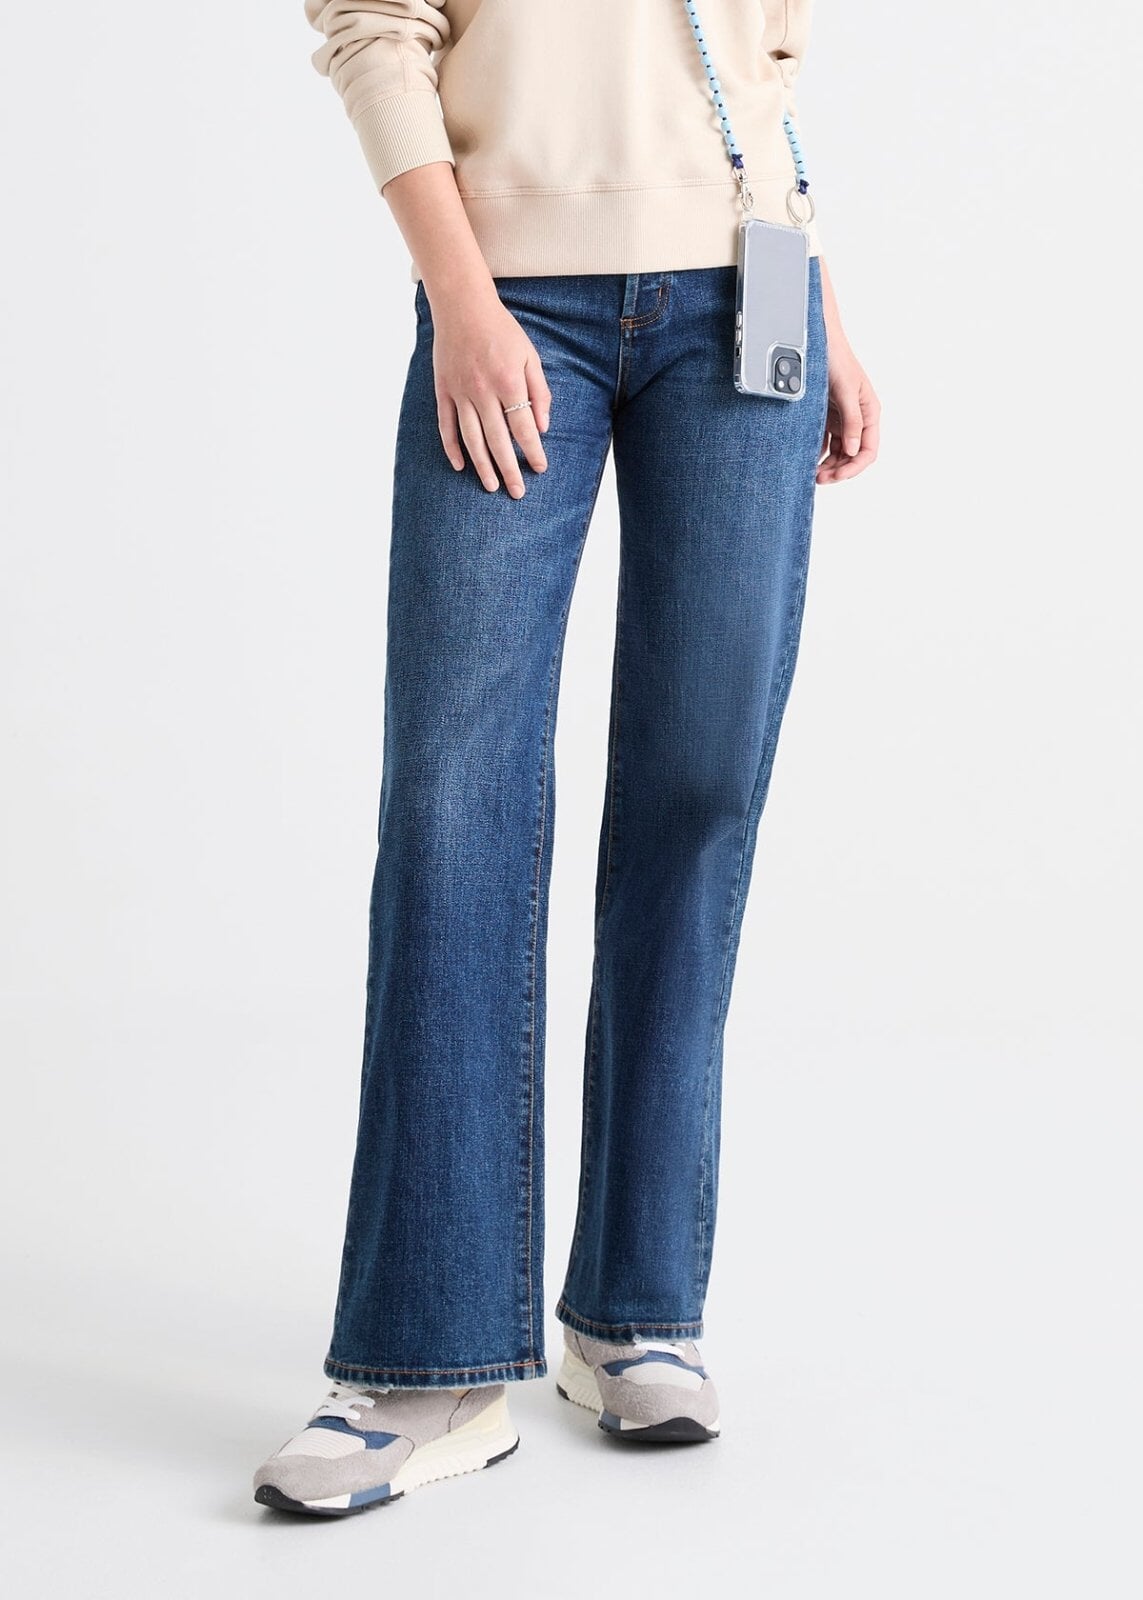 Women's Light and Medium Wash Jeans